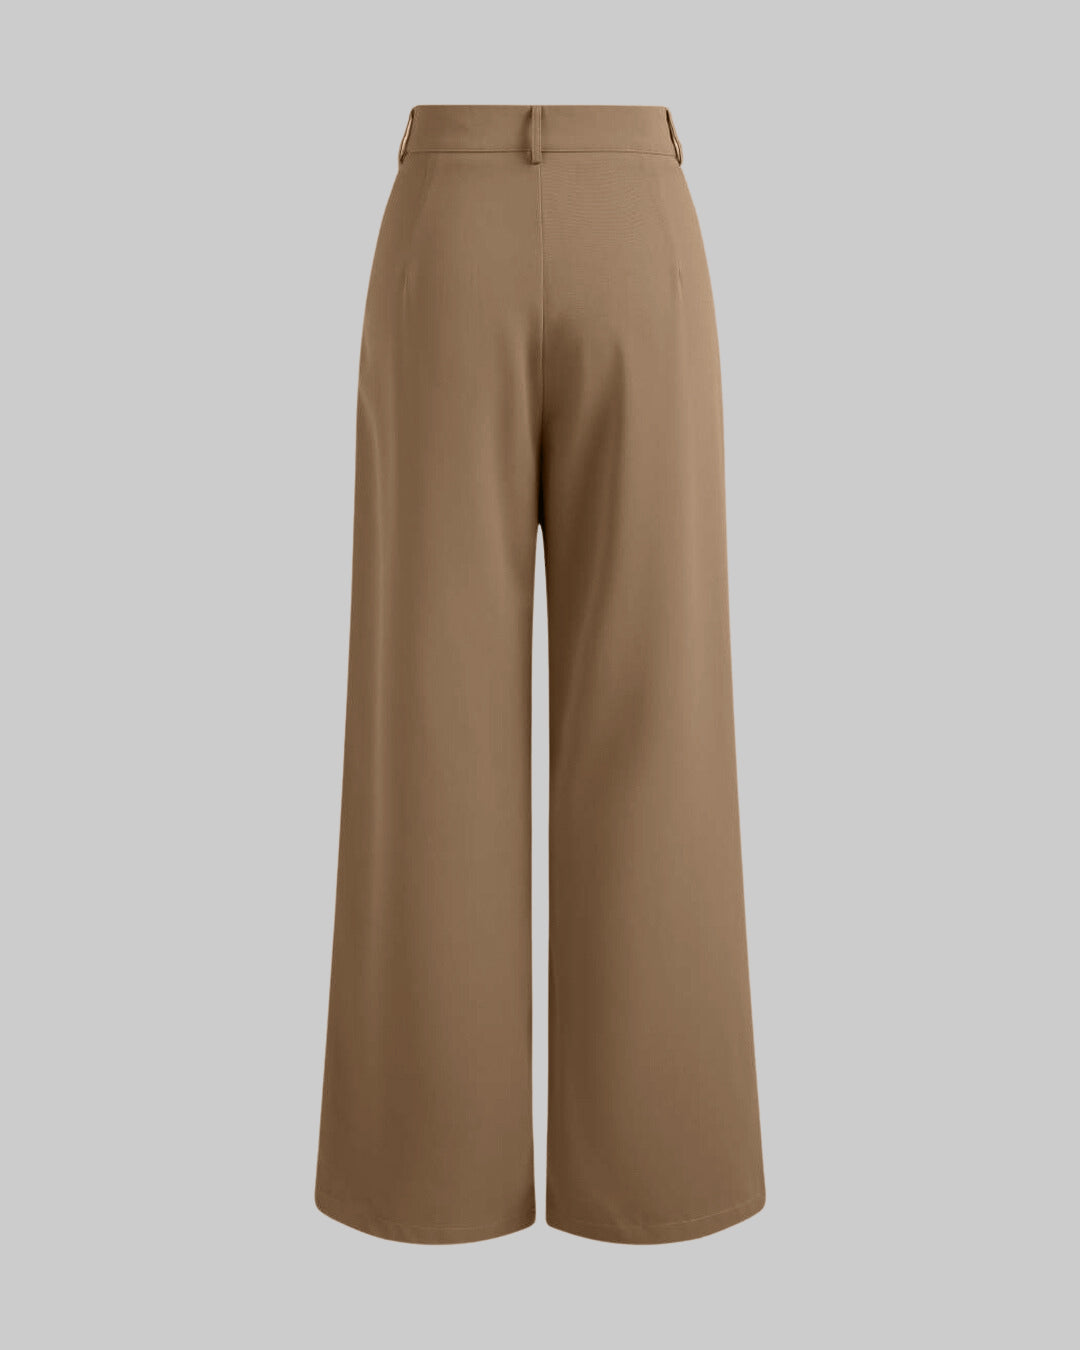 Trending Baggy Brown Korean Pants In Premium Quality